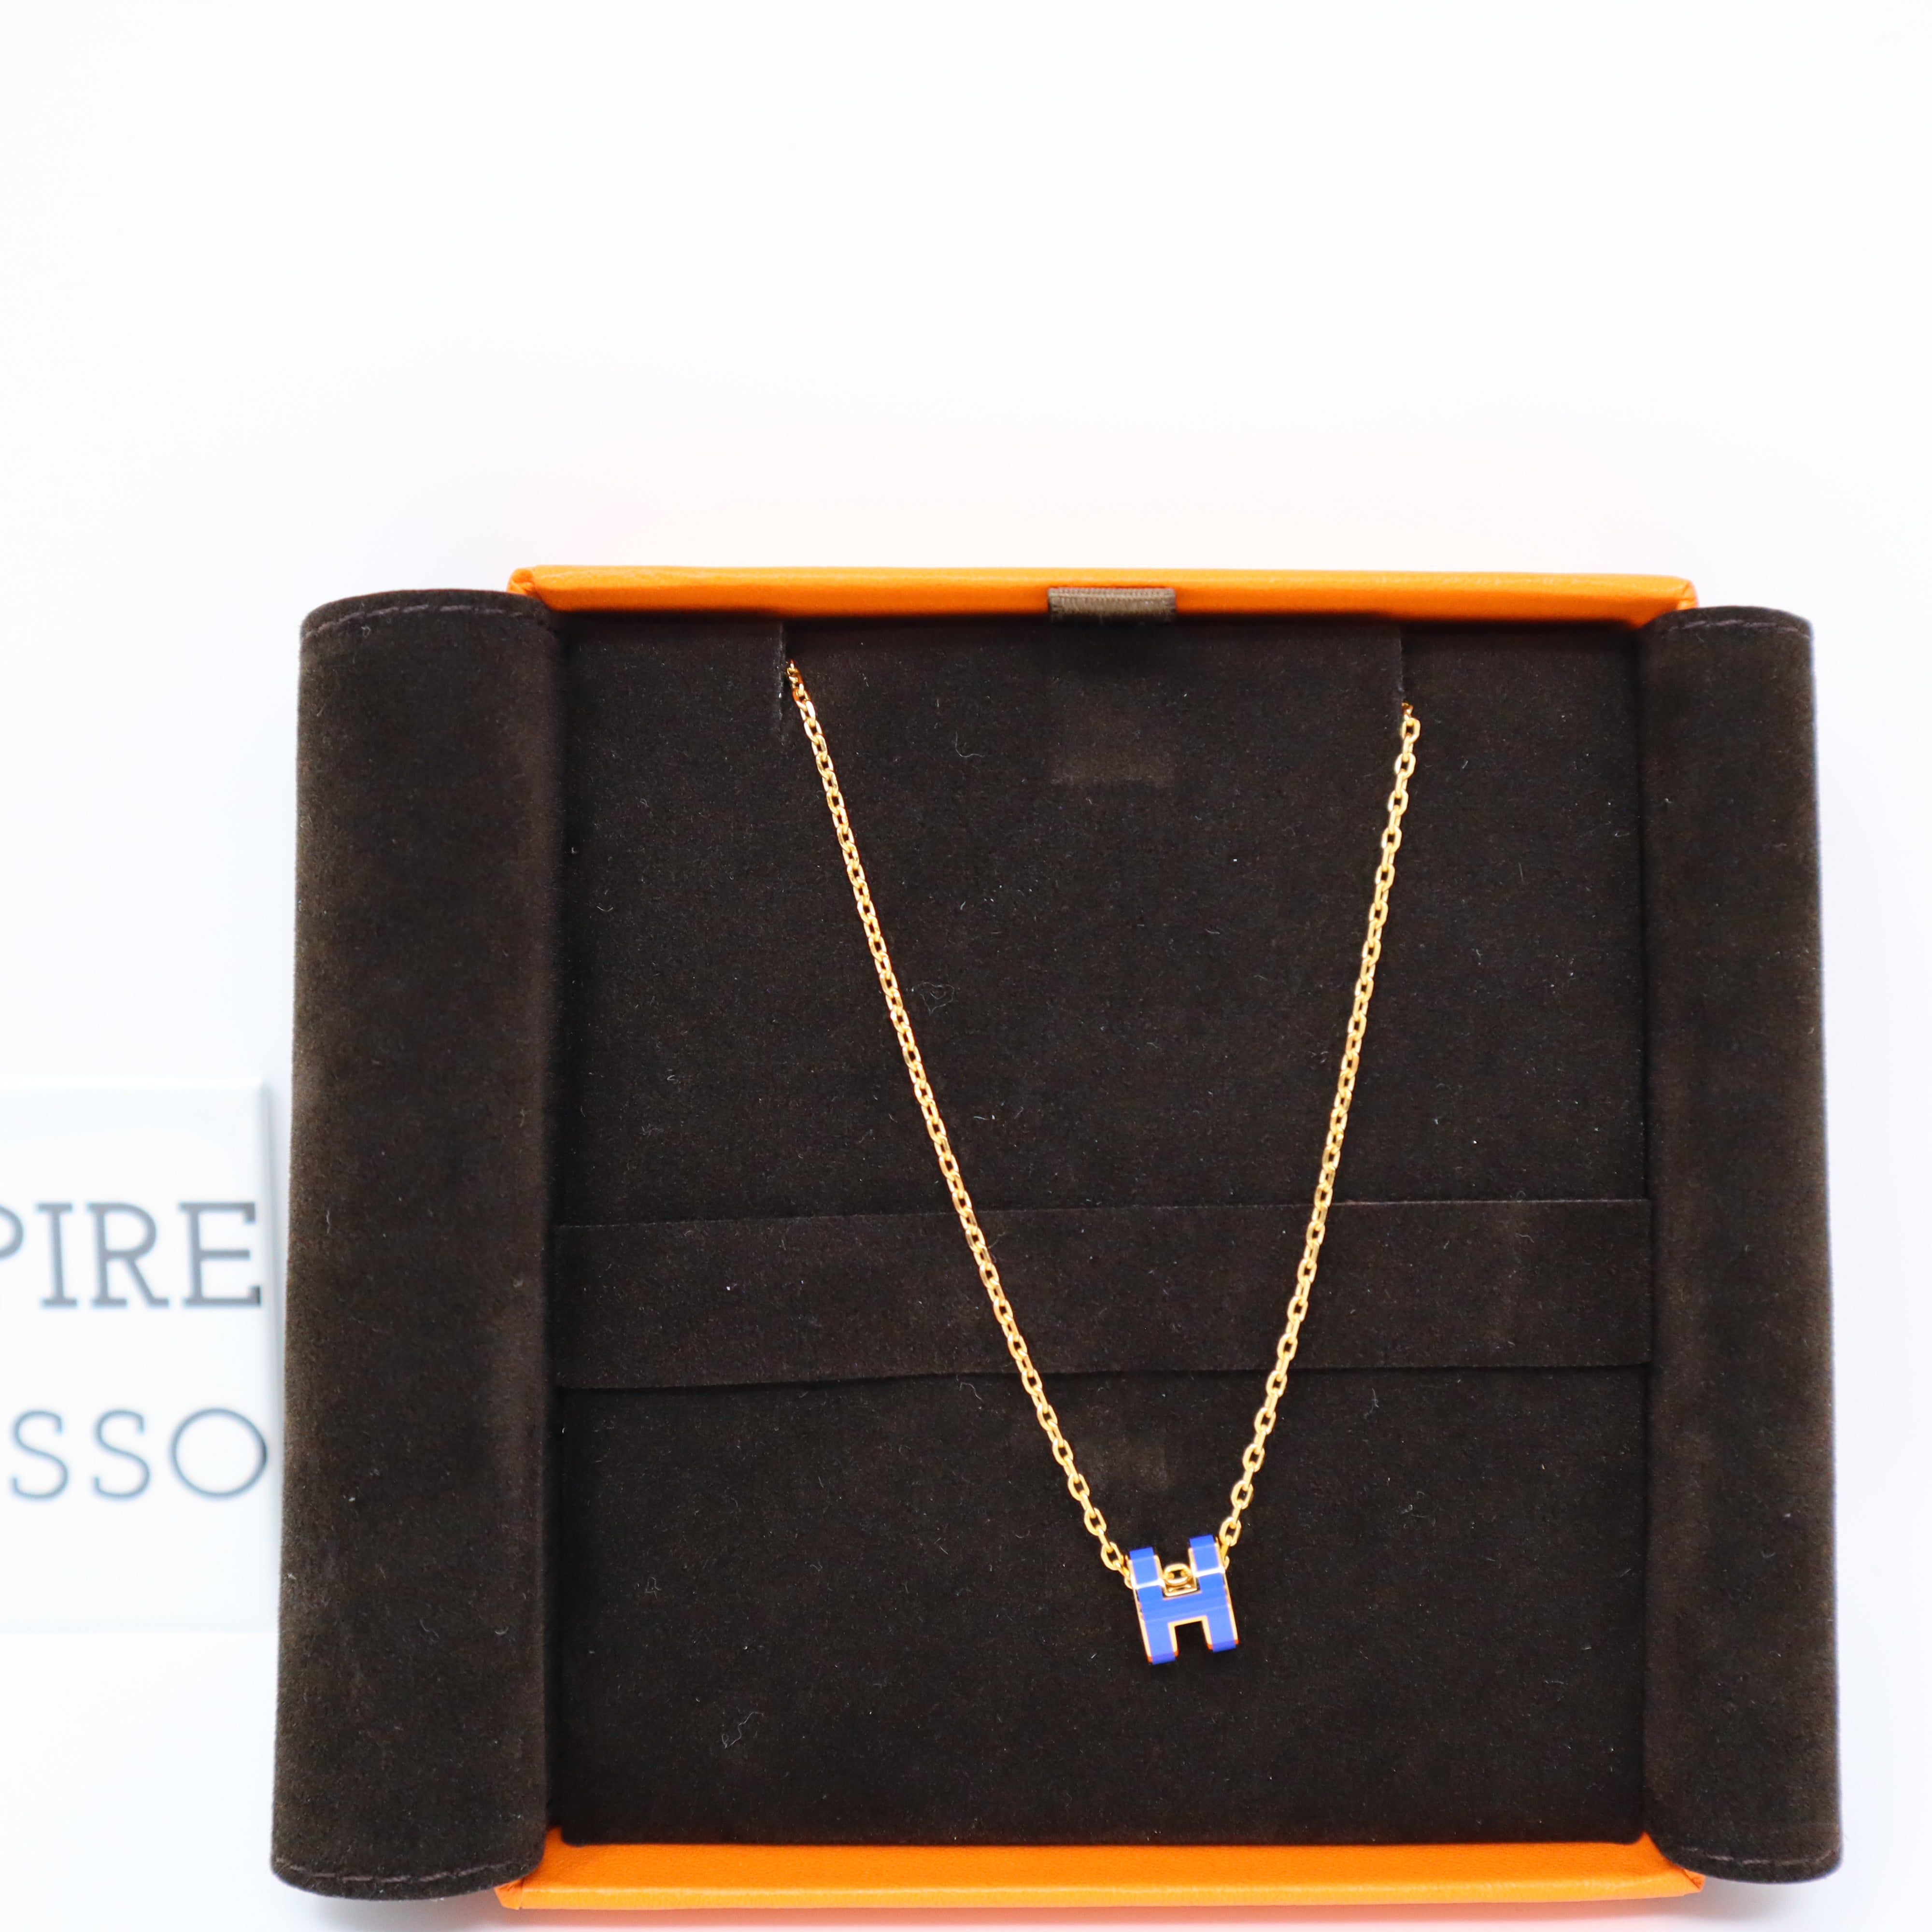 Hermes Pop H Necklace (Royal Blue and Gold)